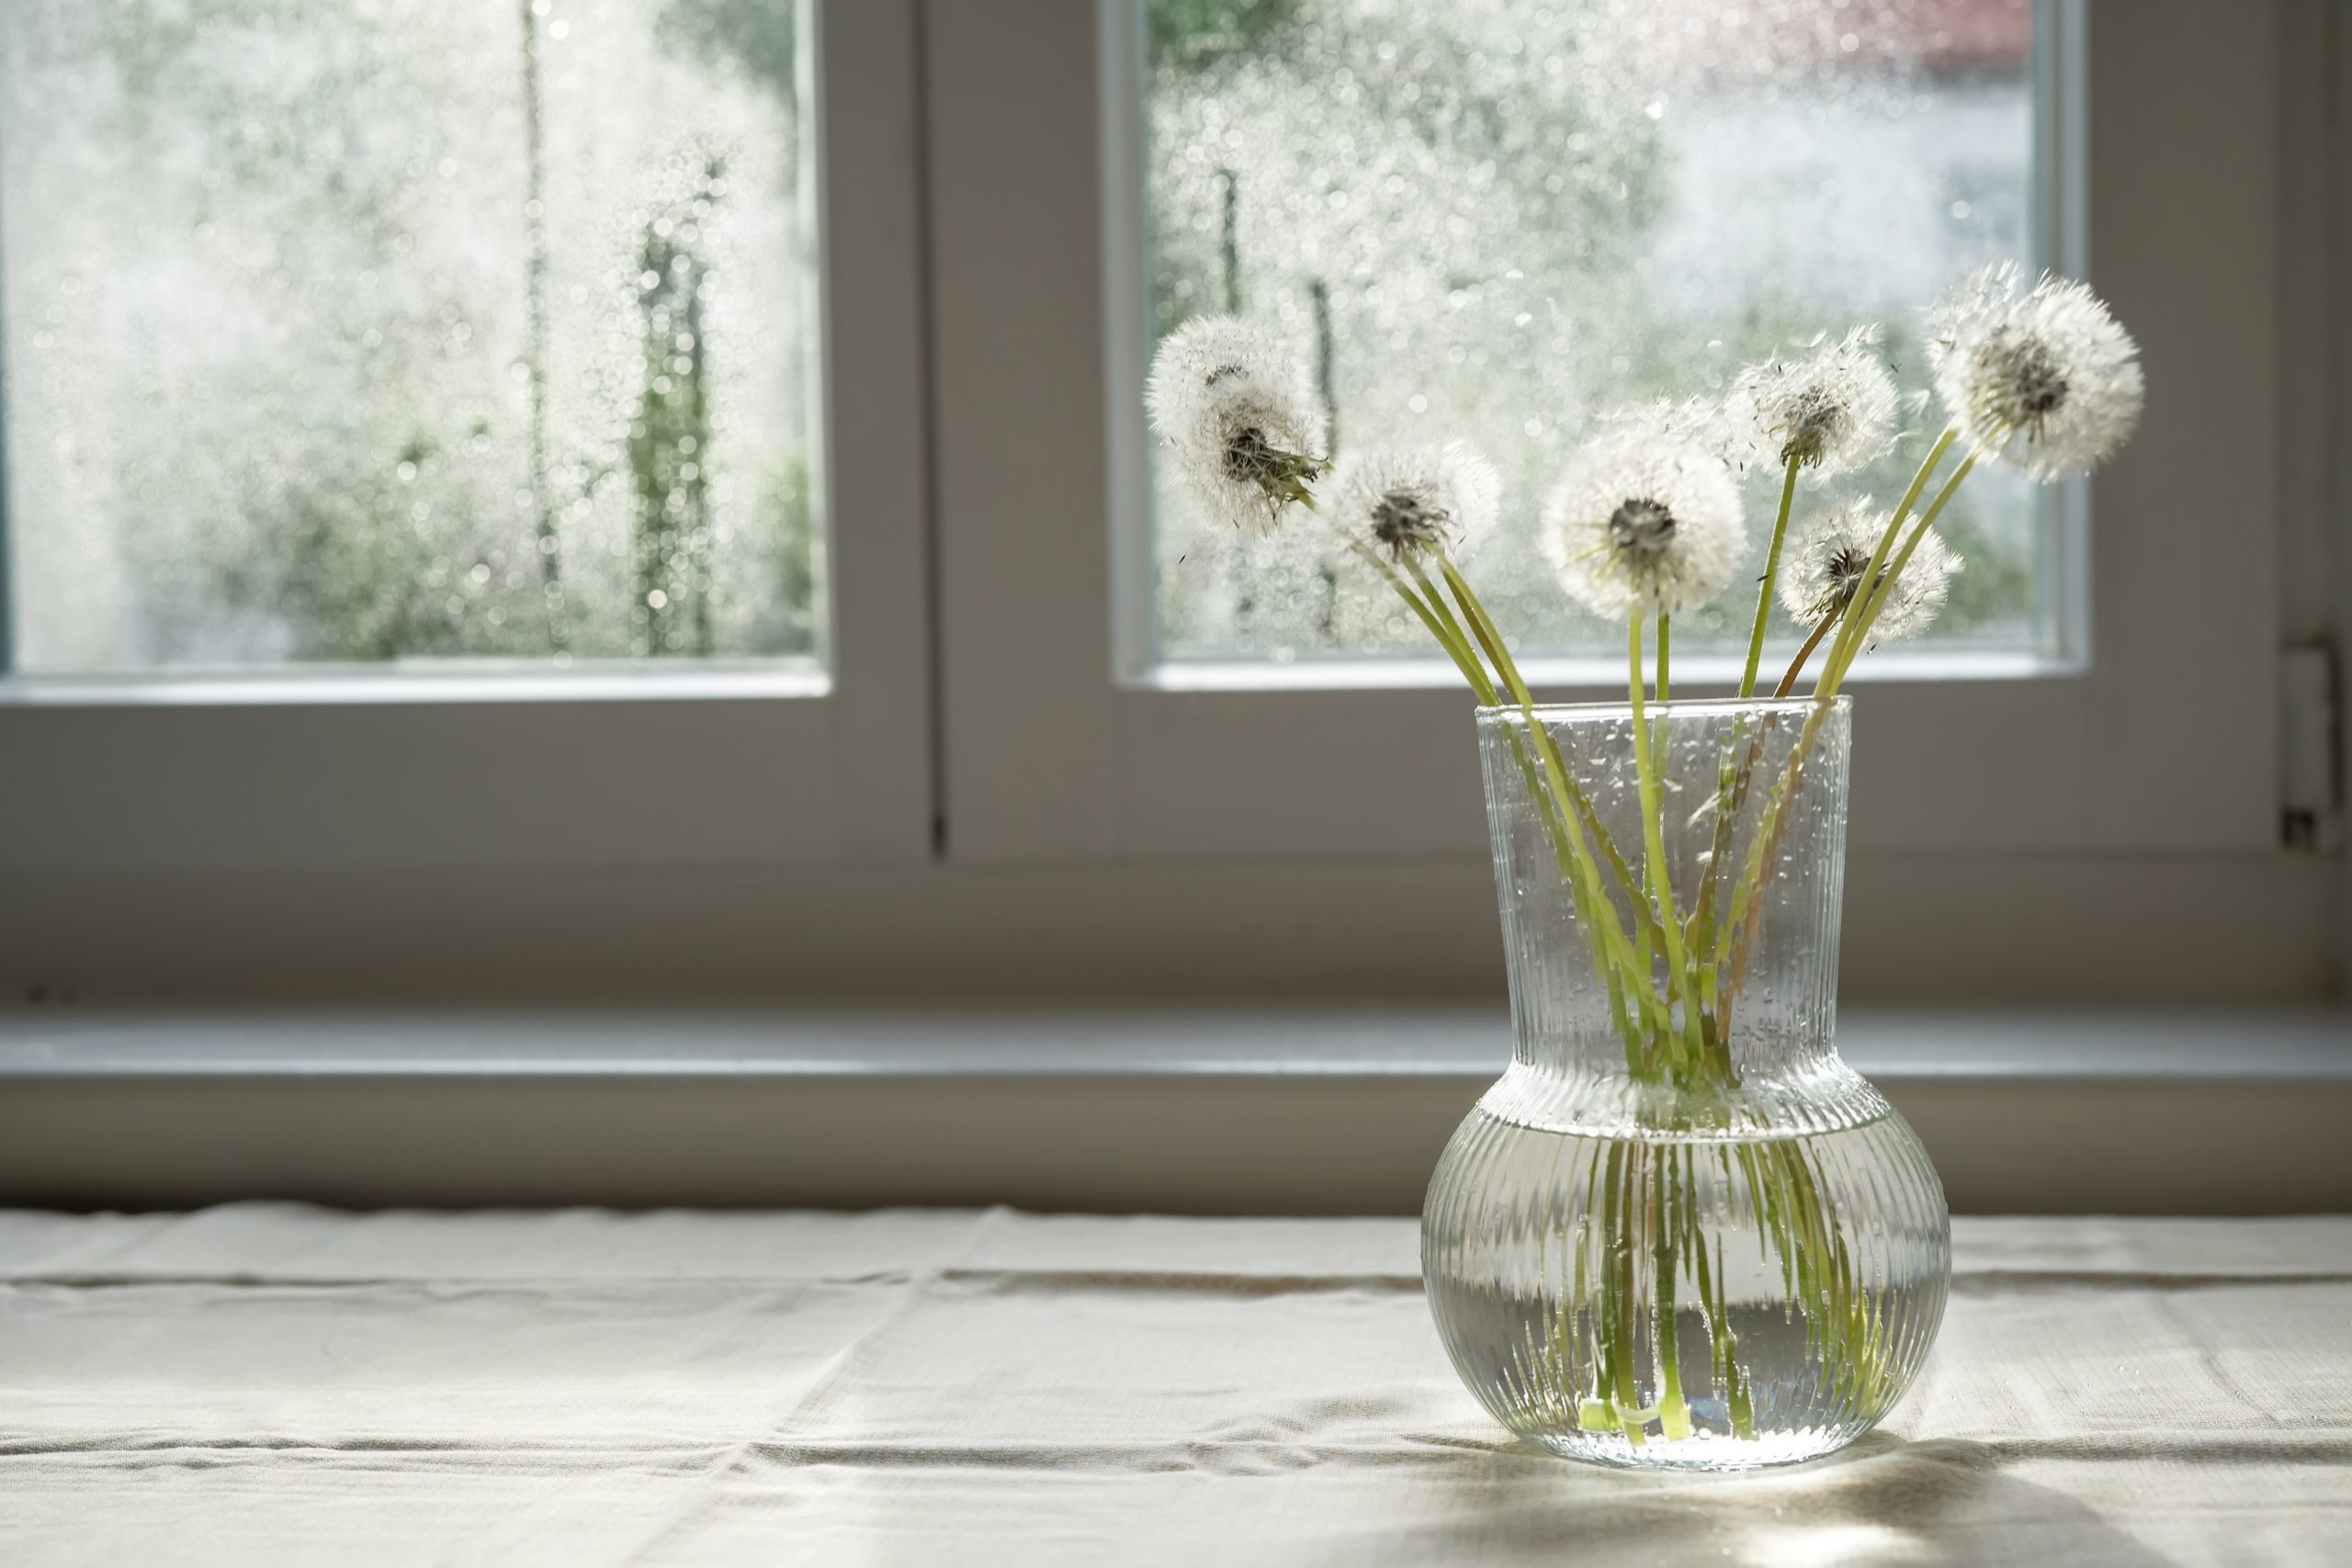 White dandelions in glass vase on the window